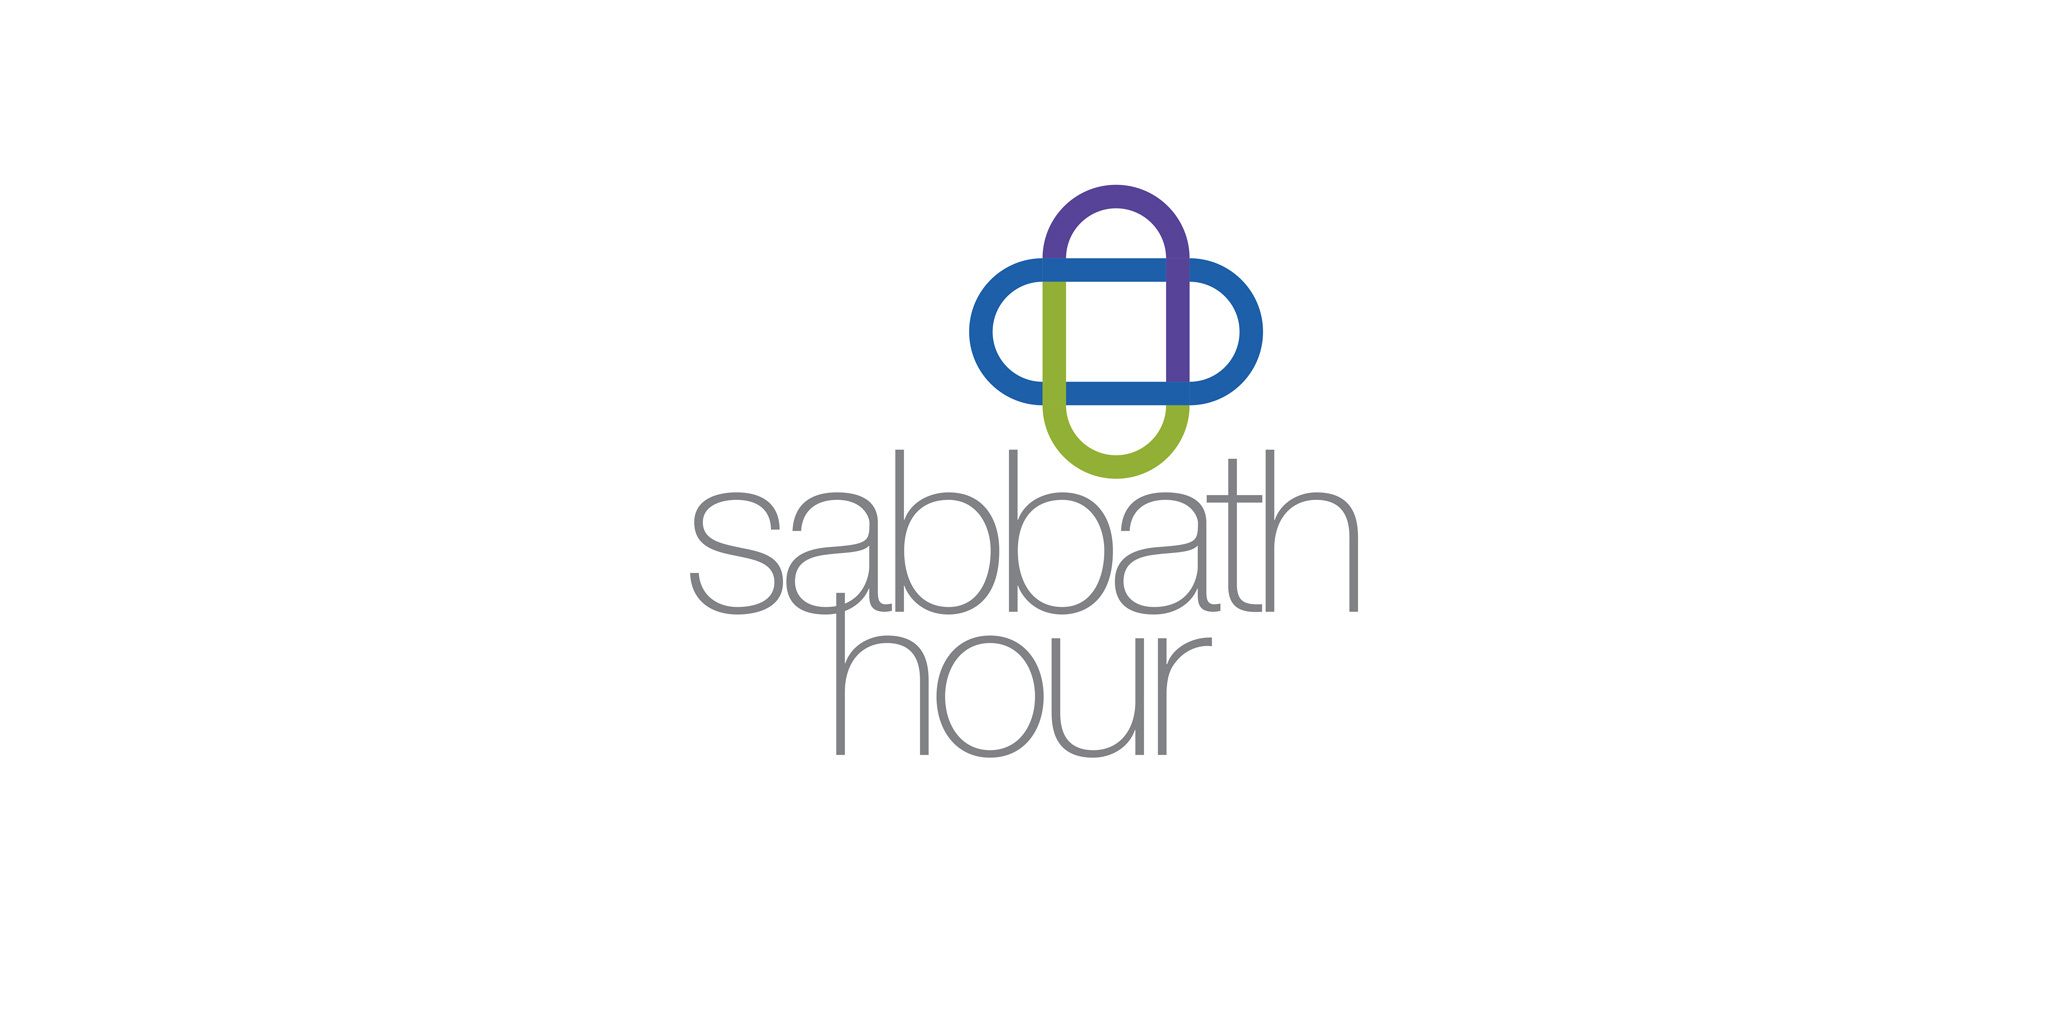 ANTS_Sabbath_Hour_1024_011215.jpg